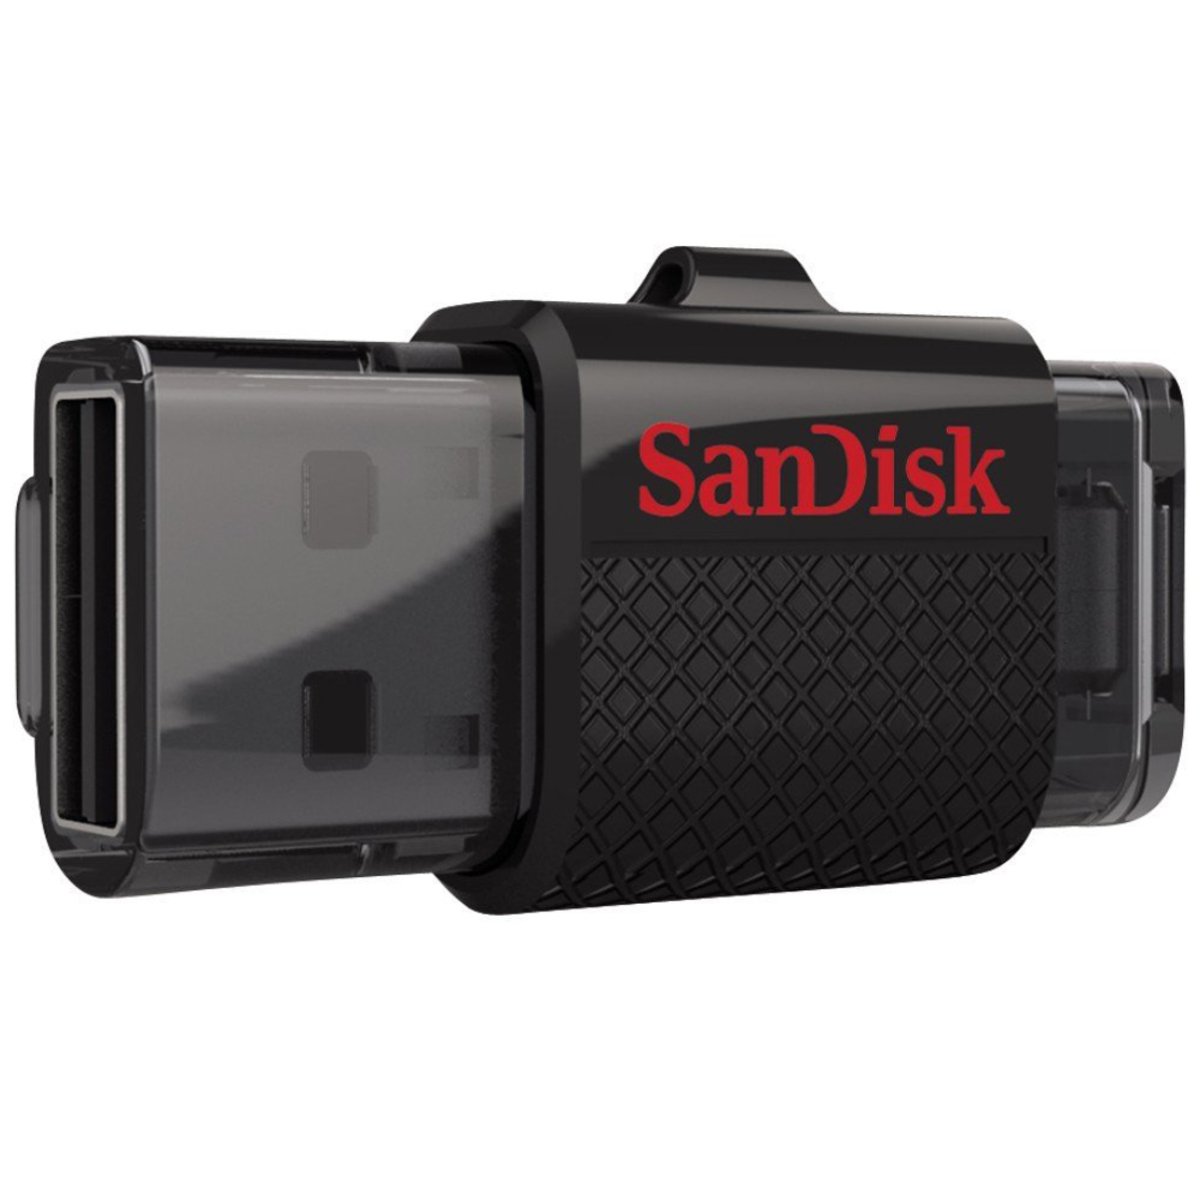 Sandisk Ultra Dual Flash Drive SDDDG46 16GB